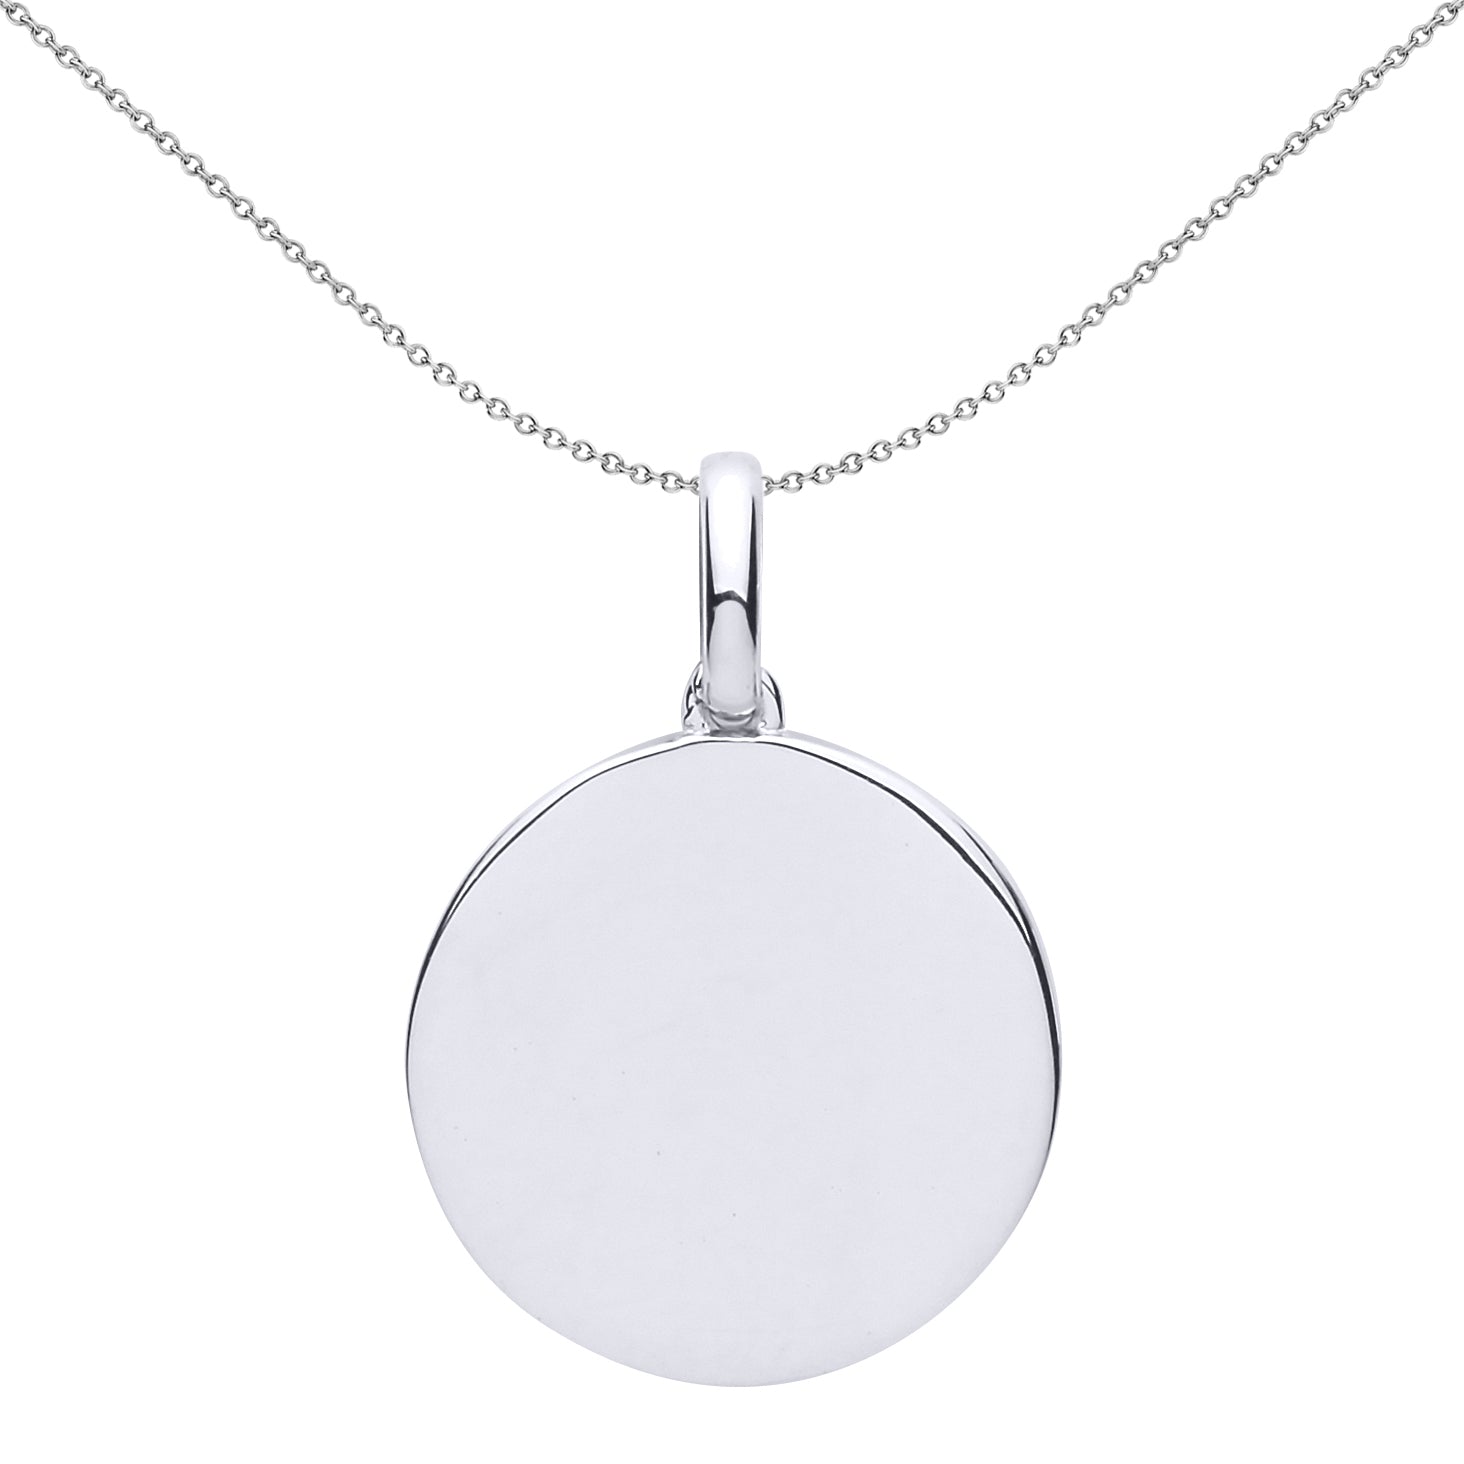 Silver  Round Disc Medallion Necklace 18 inch - GVP499